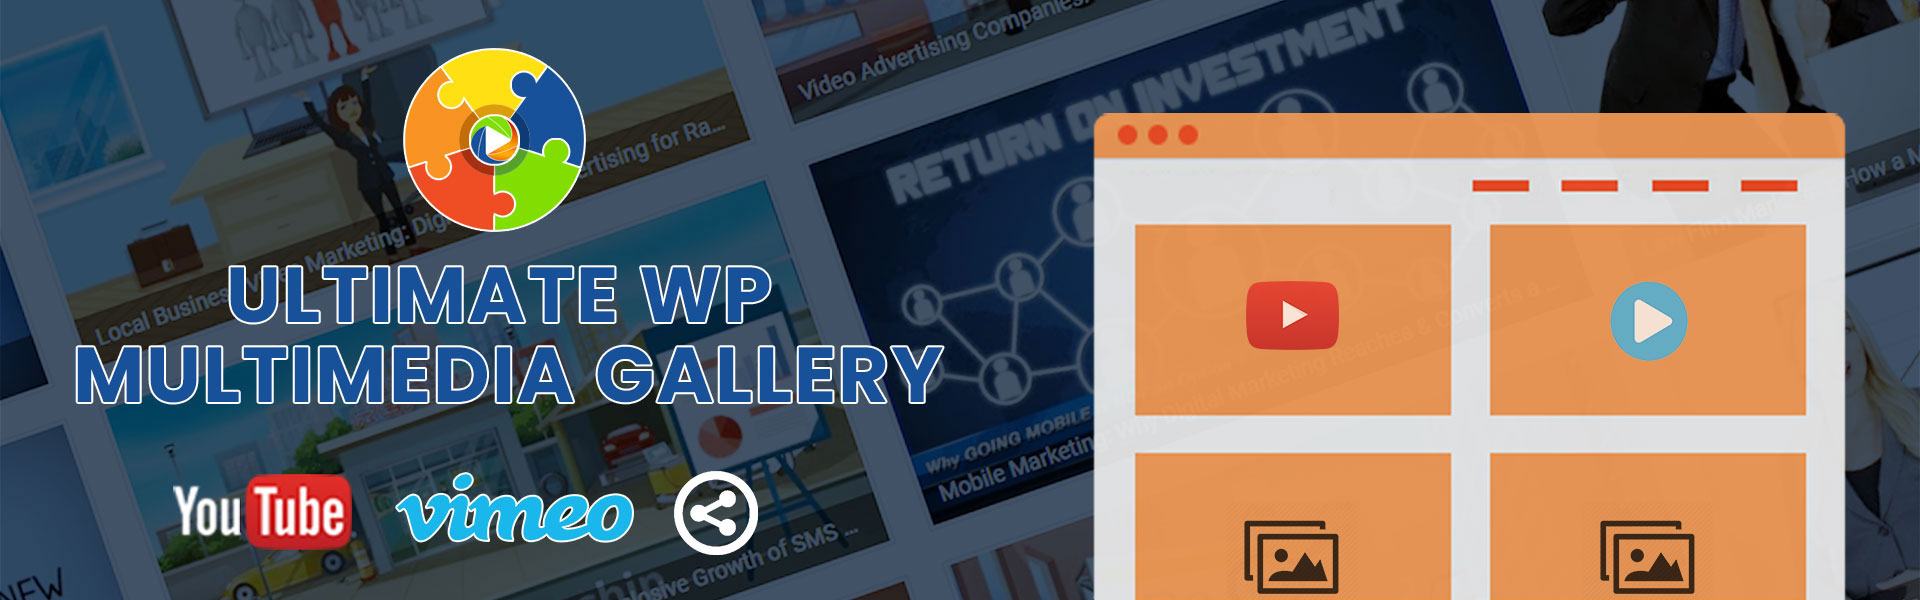 Ultimate WP Multimedia Gallery